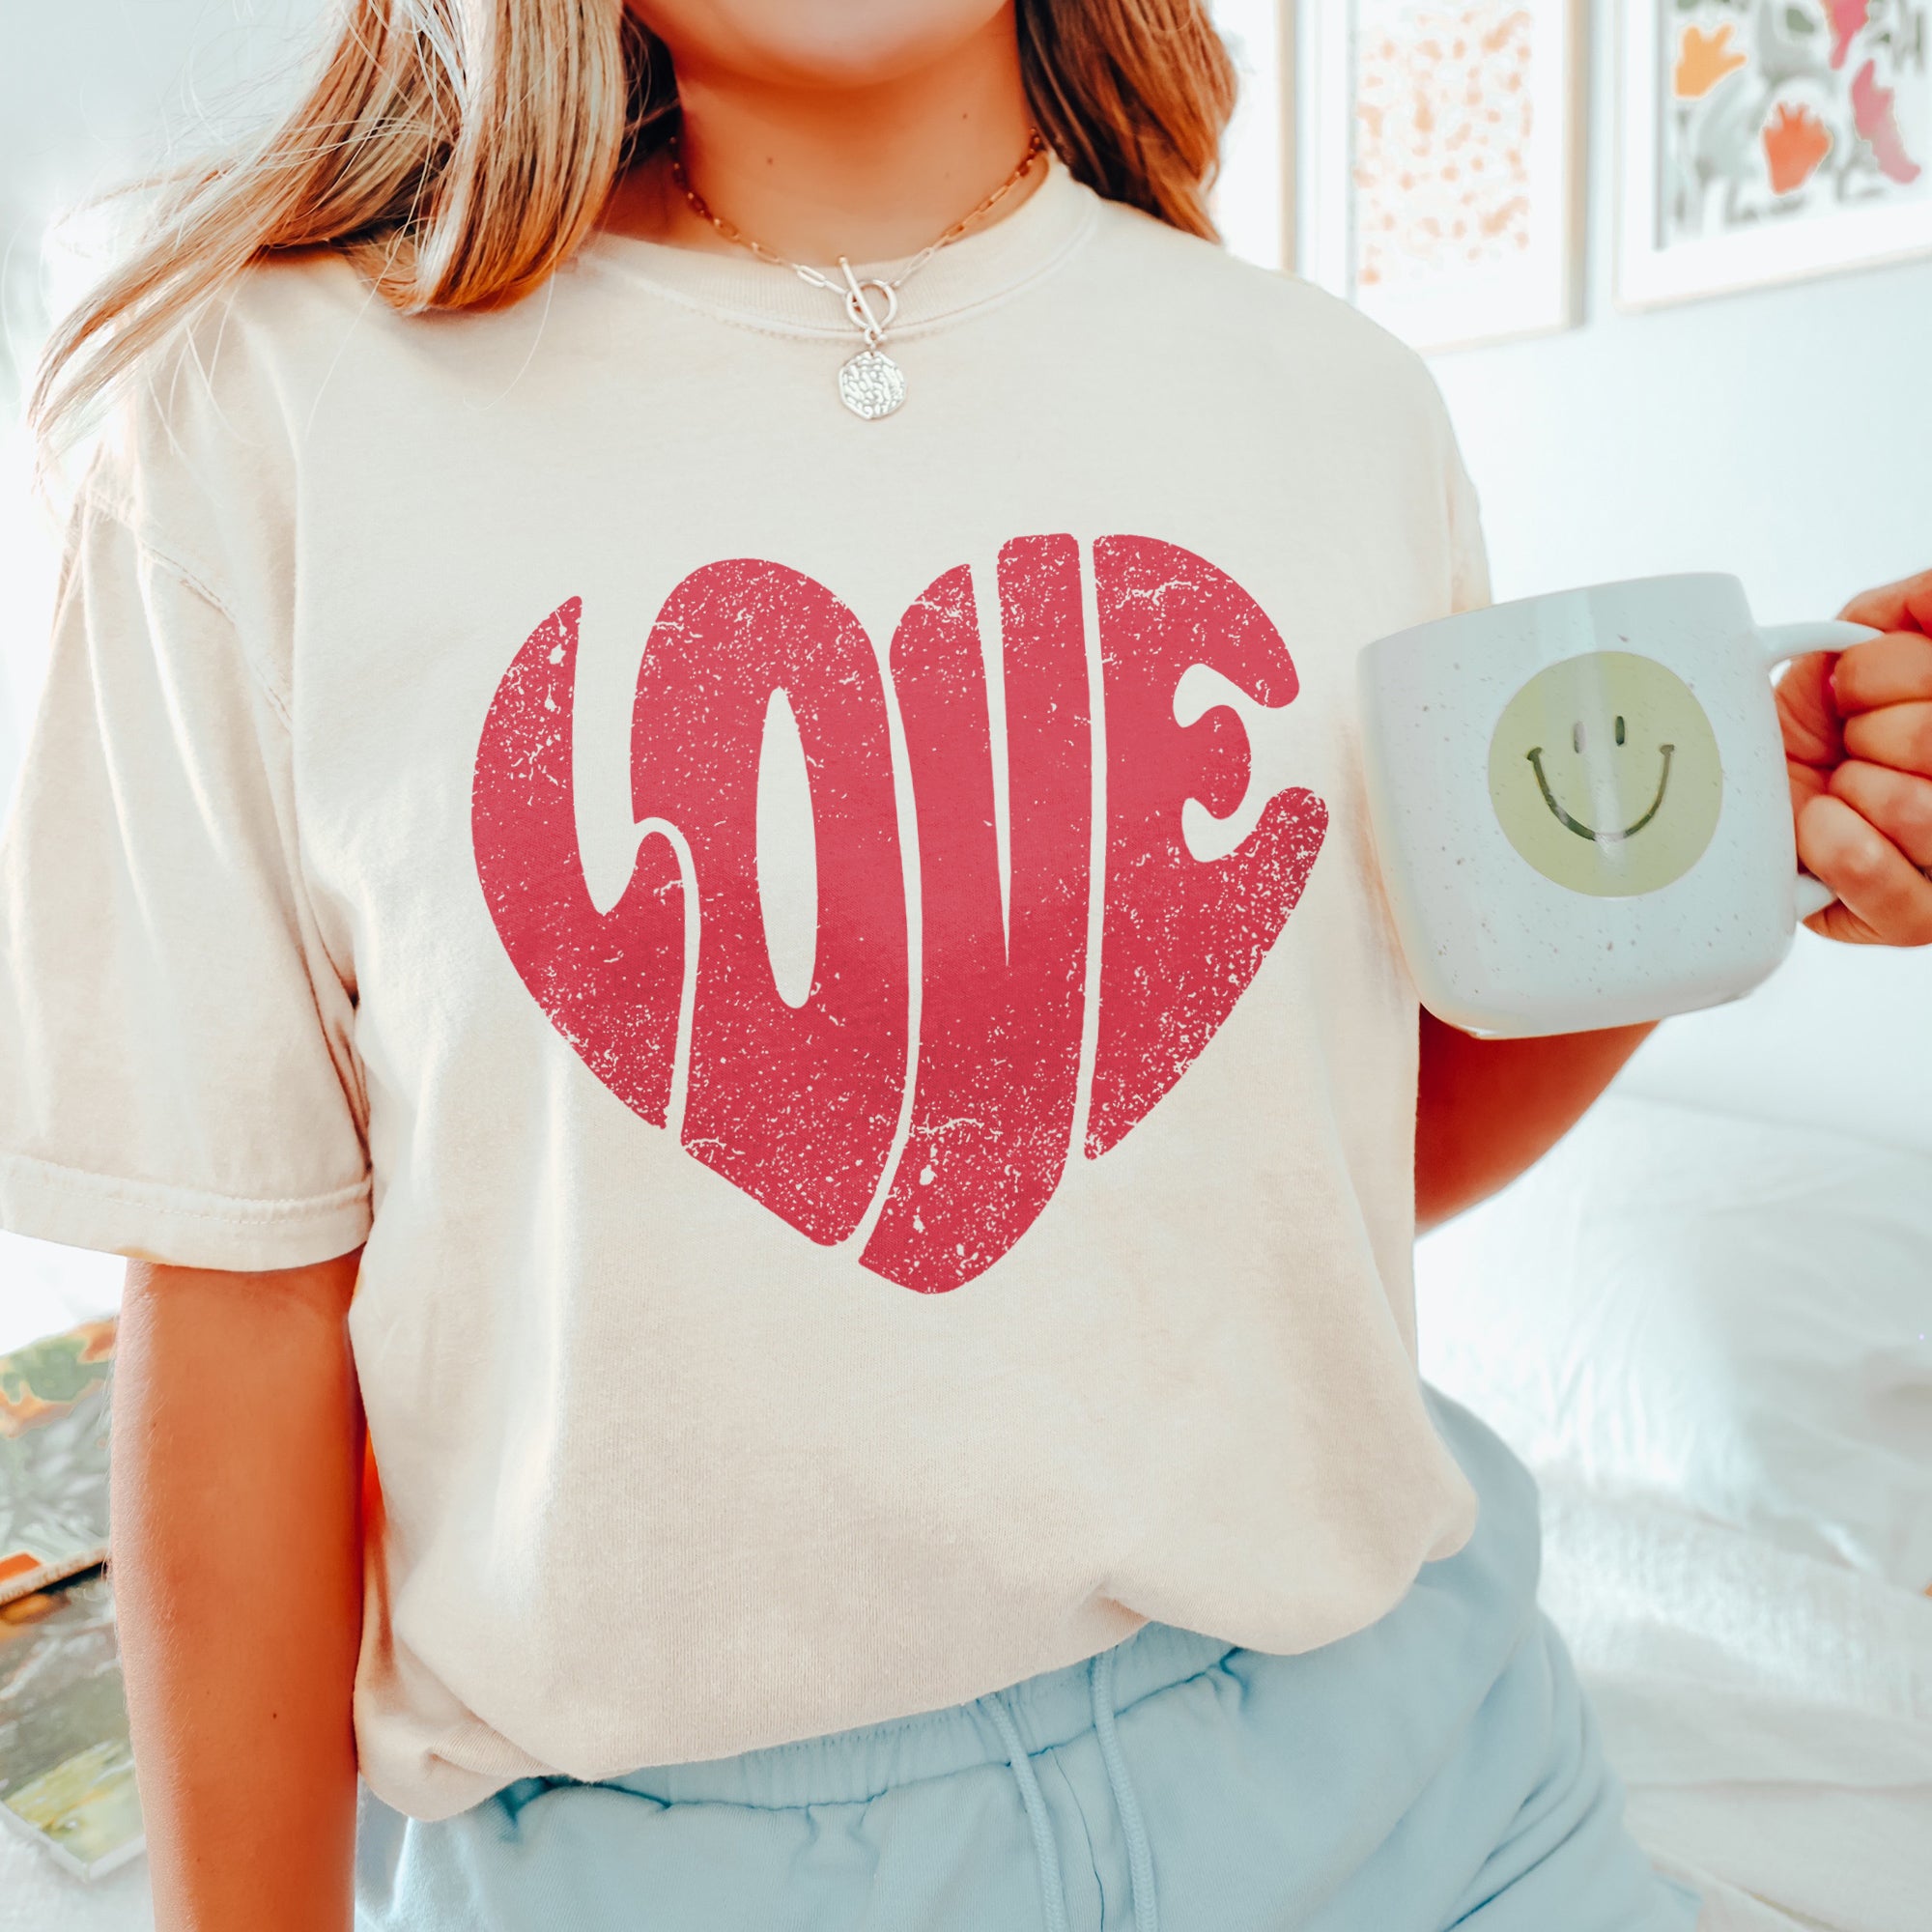 Retro Heart Shirt Garment-Dyed Tee